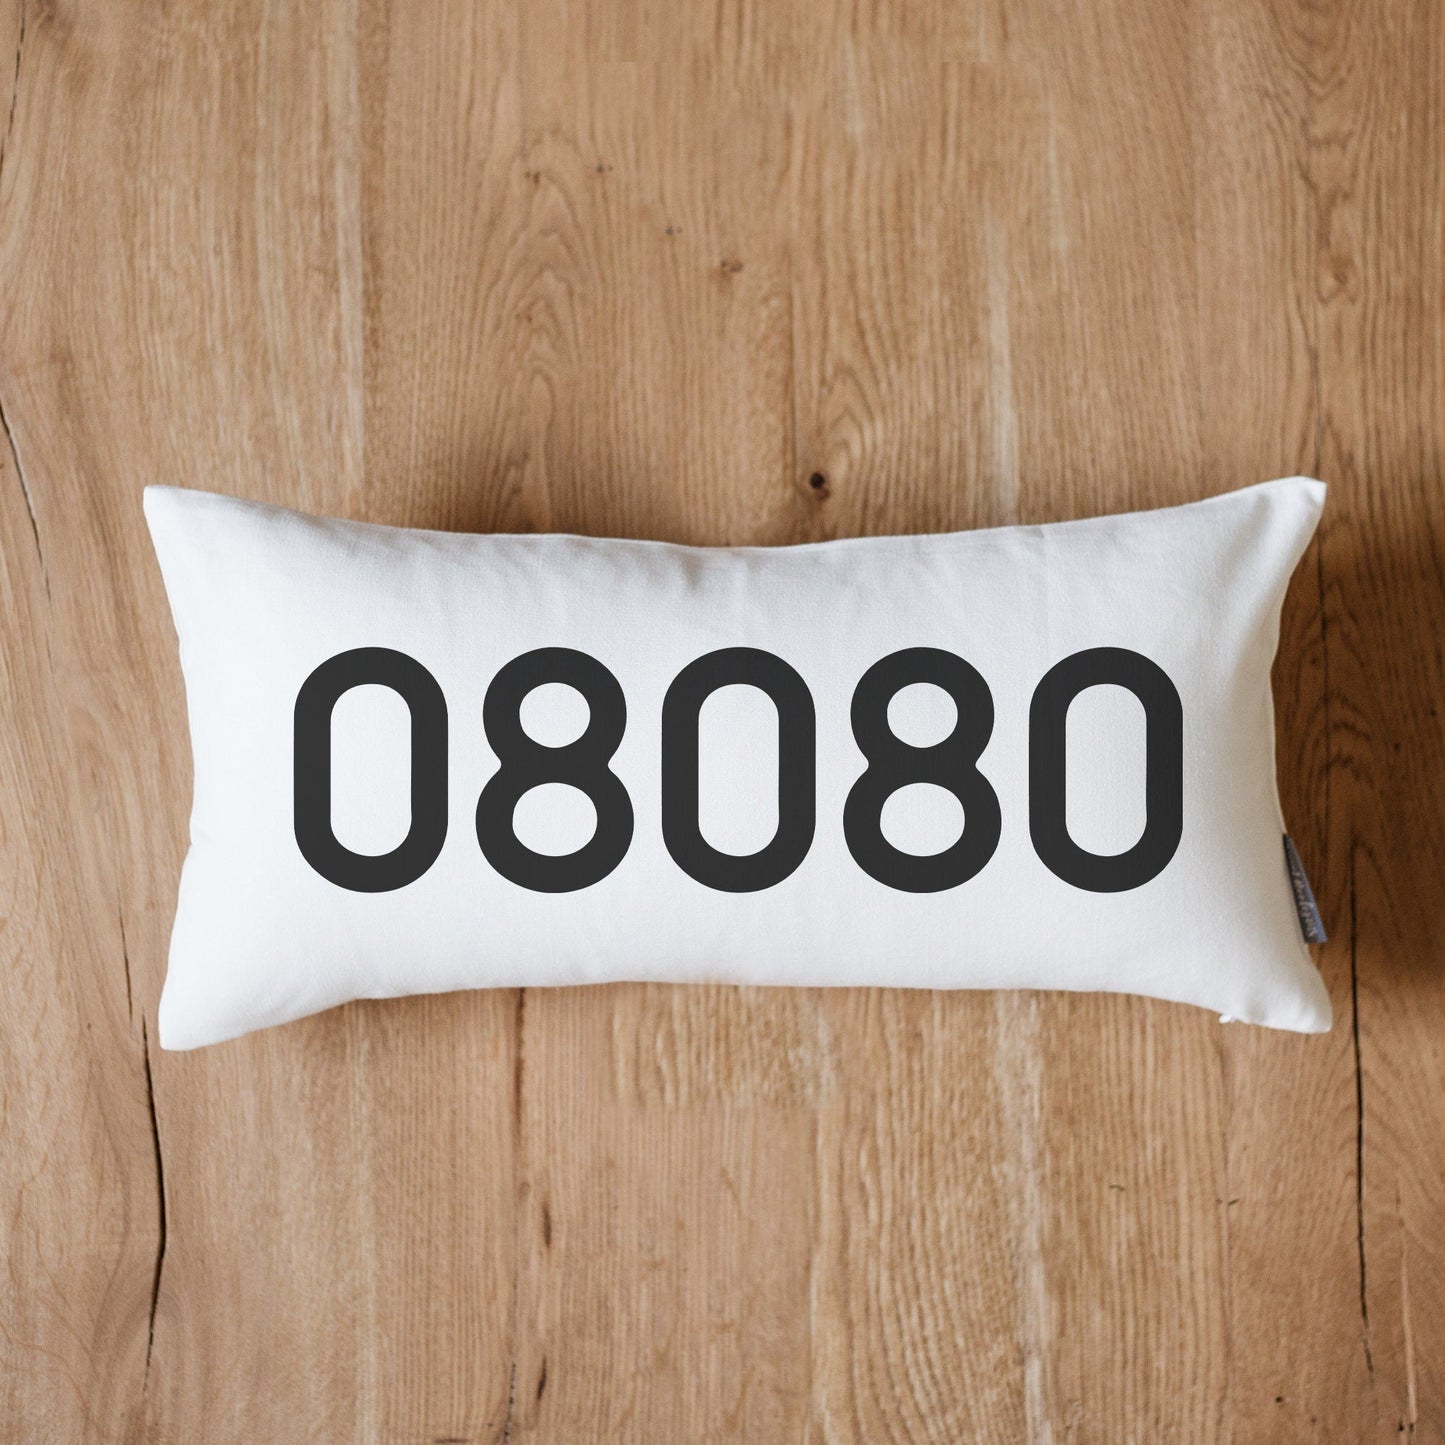 Personalized Zip Code Pillow | Personalized Pillow | Dorm Decor | Monogrammed Gift | Rustic Home Decor | Home Decor | Farmhouse Decor Gift